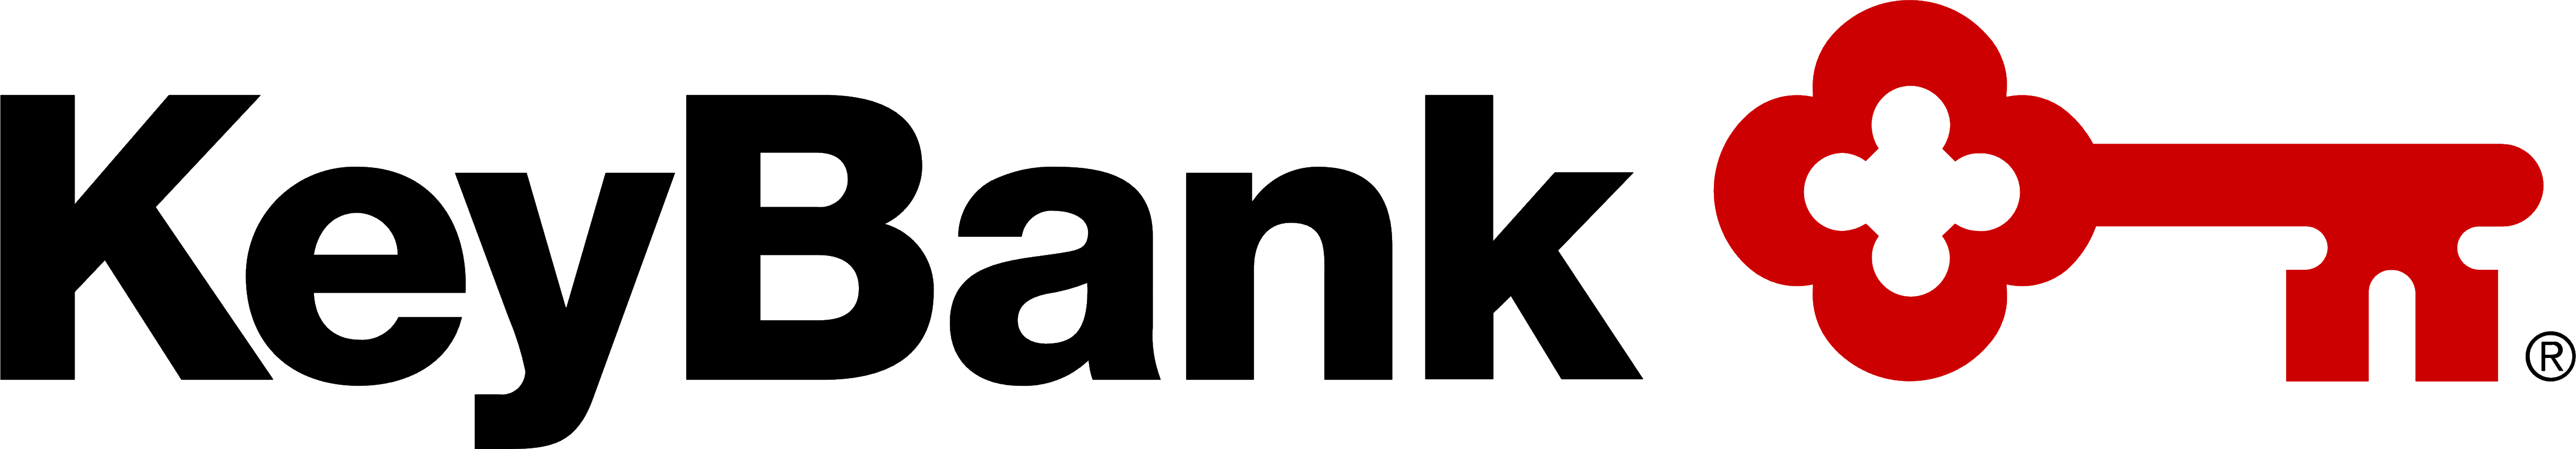 KeyBank_Logo